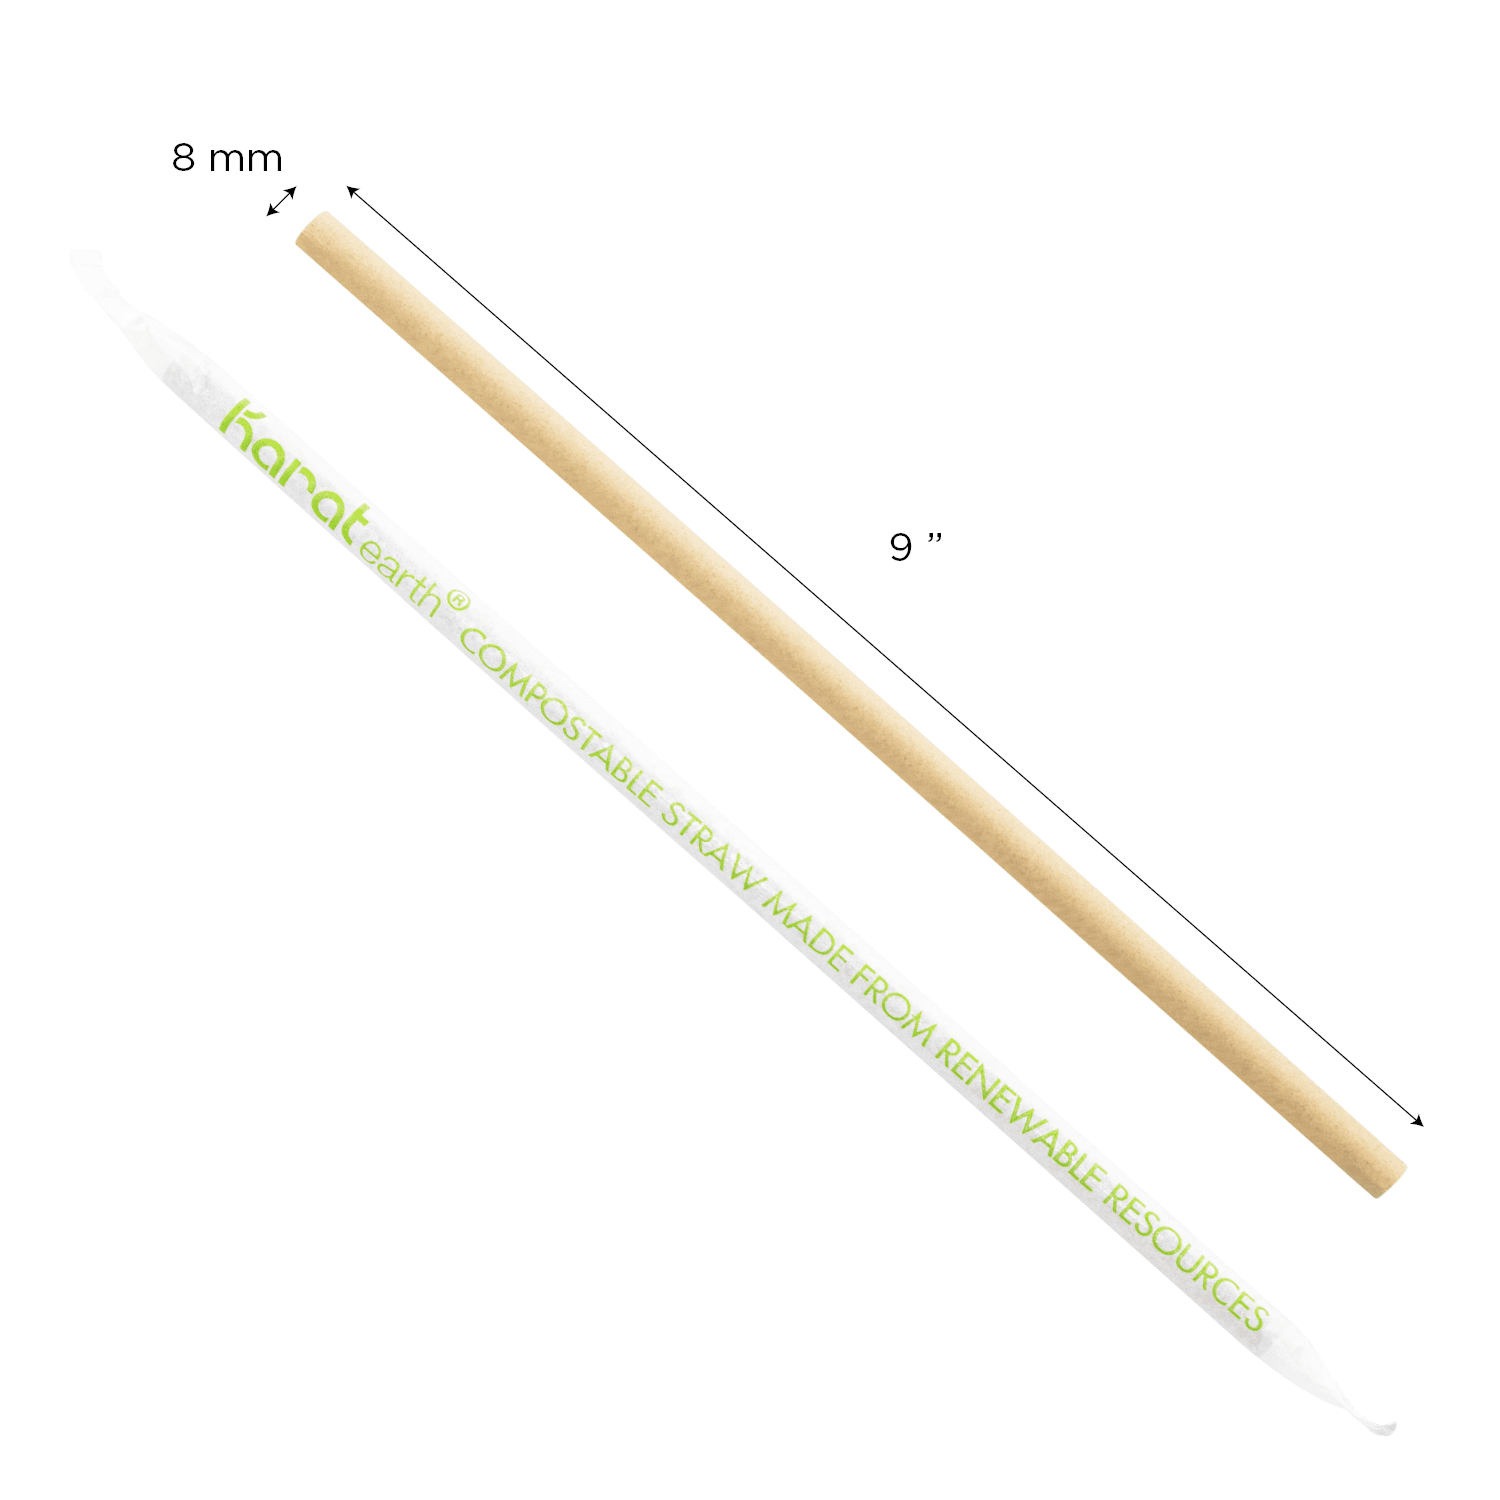 Karat Earth 9" Flat Cut Bamboo Fiber Giant Straws (8mm) Paper Wrapped, Natural - 3,000 pcs